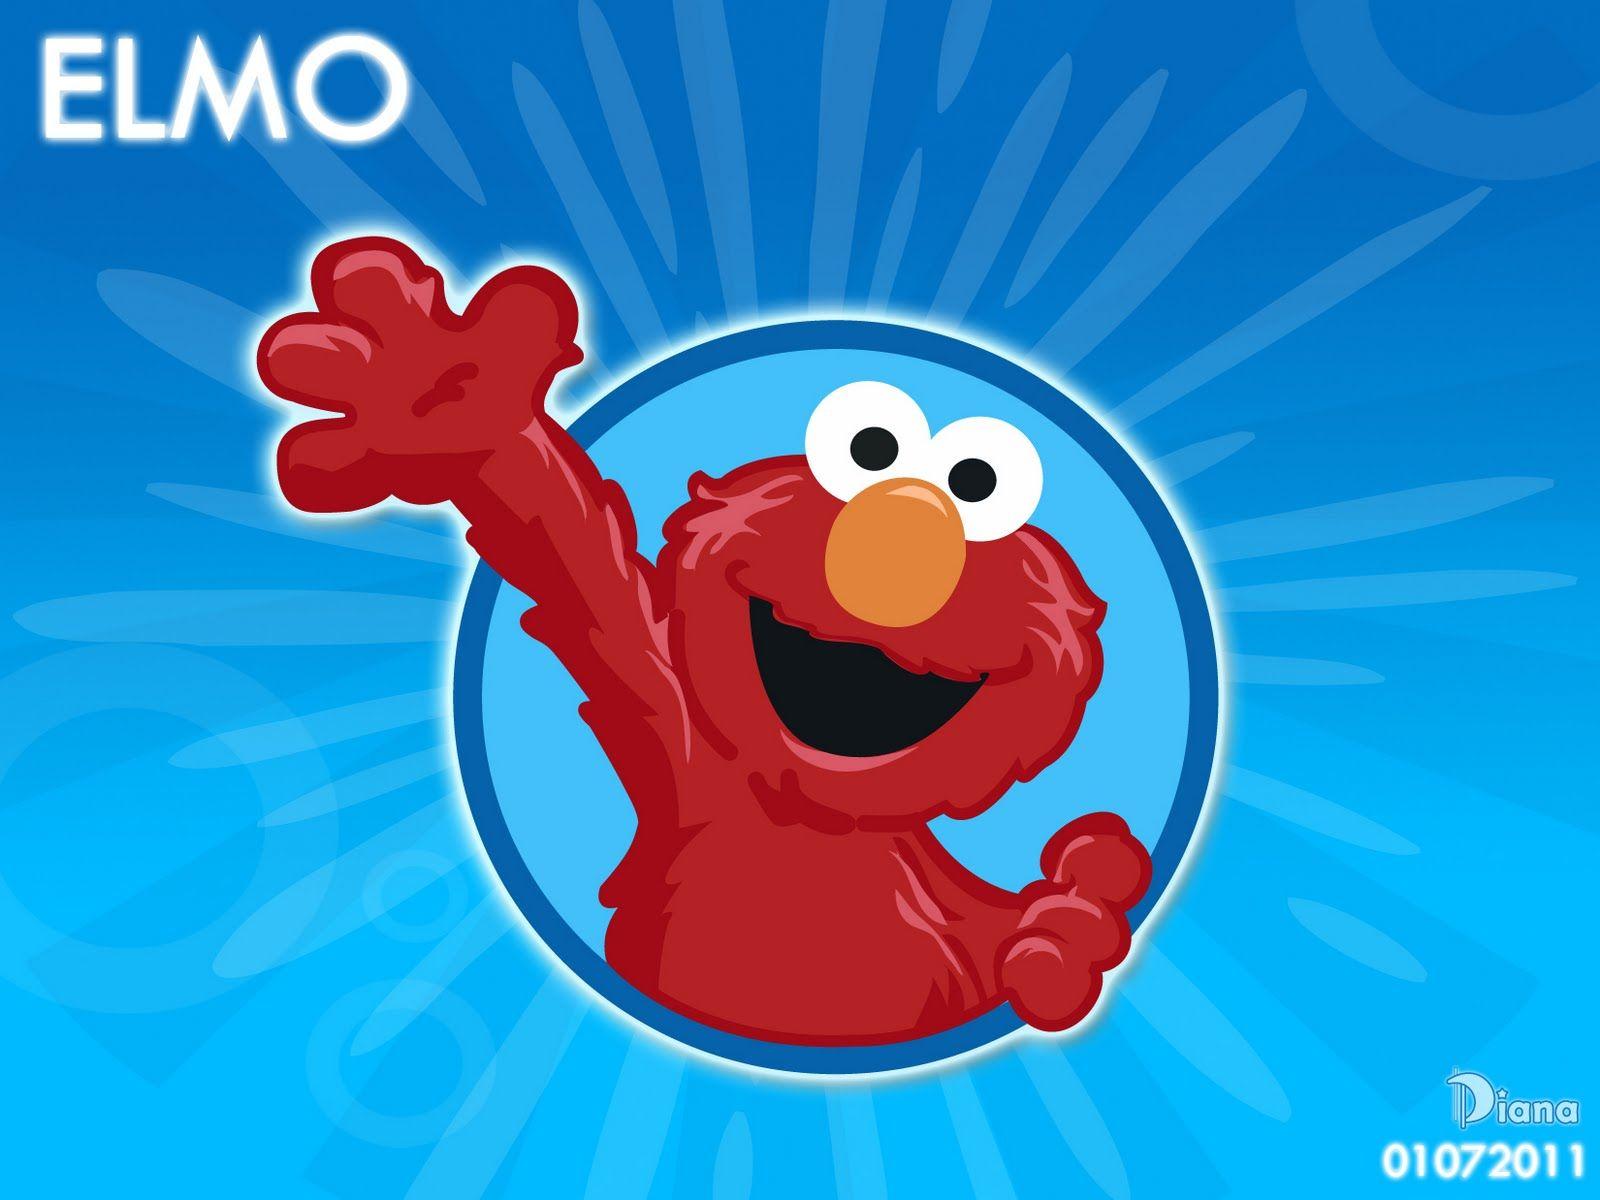 Elmo wallpaper HD free download